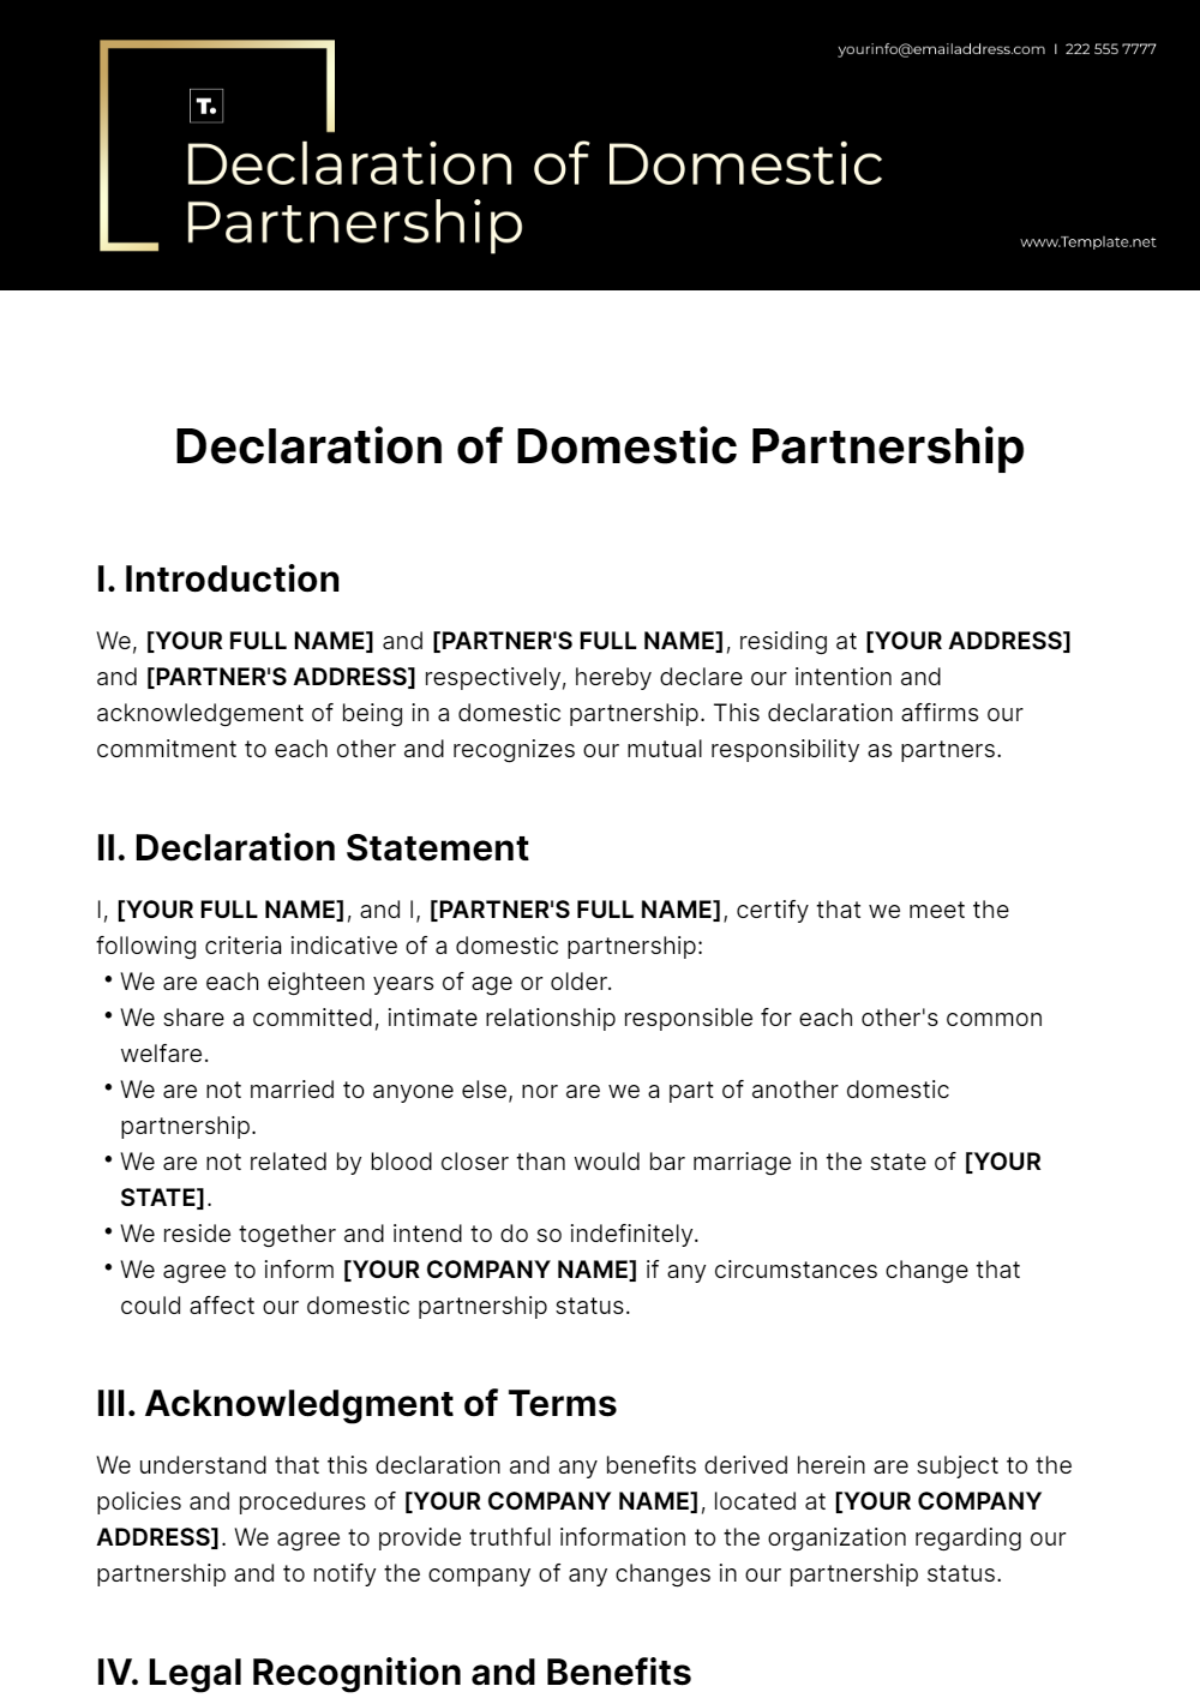 Declaration of Domestic Partnership Template